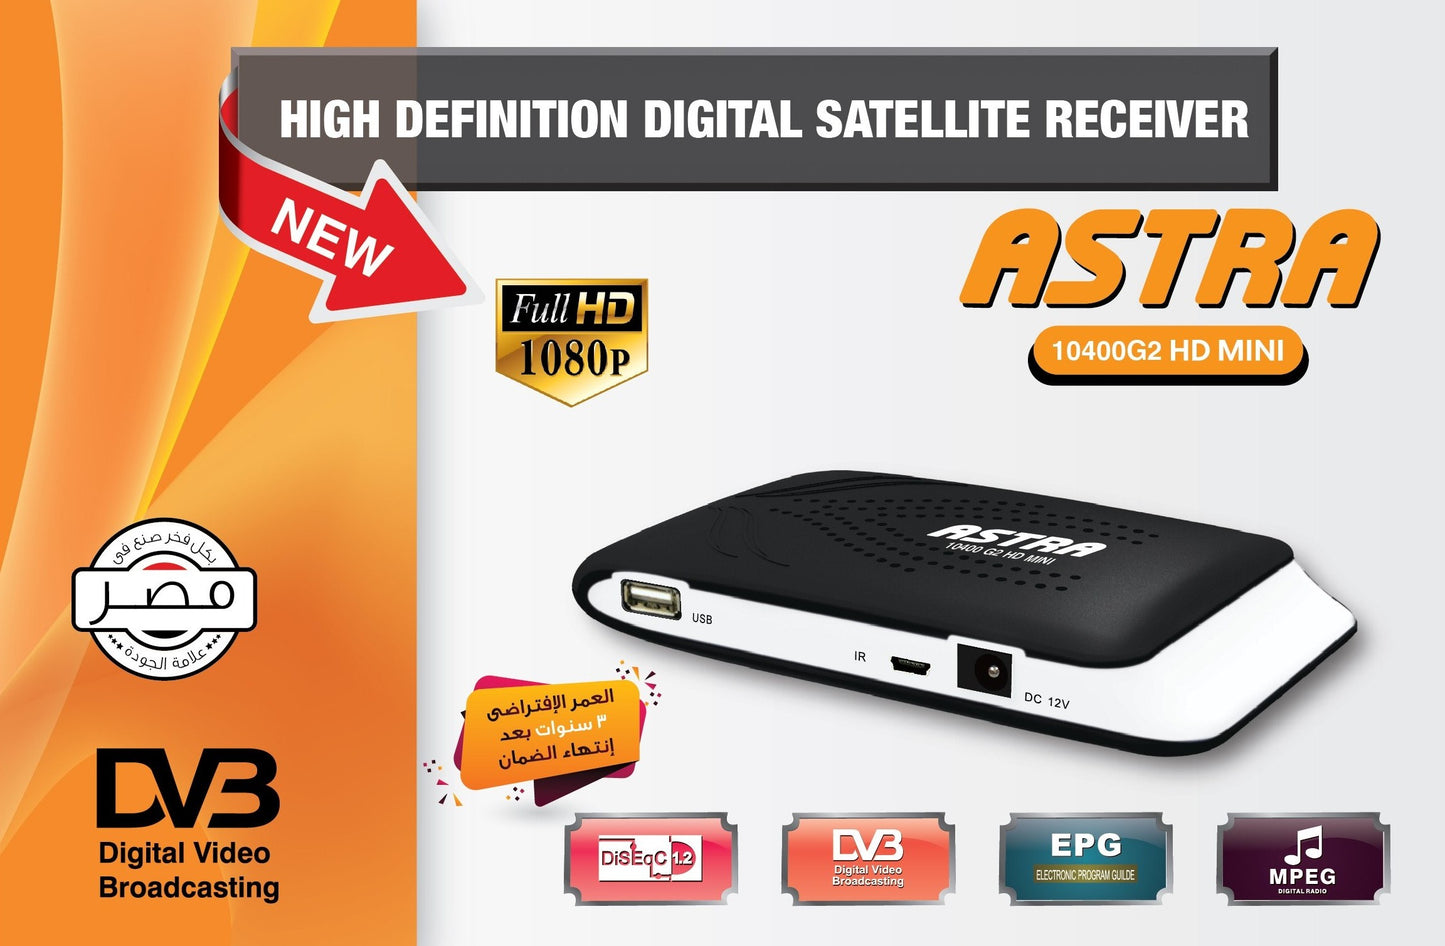 ASTRA, 10400G2 HD Mini, Receiver